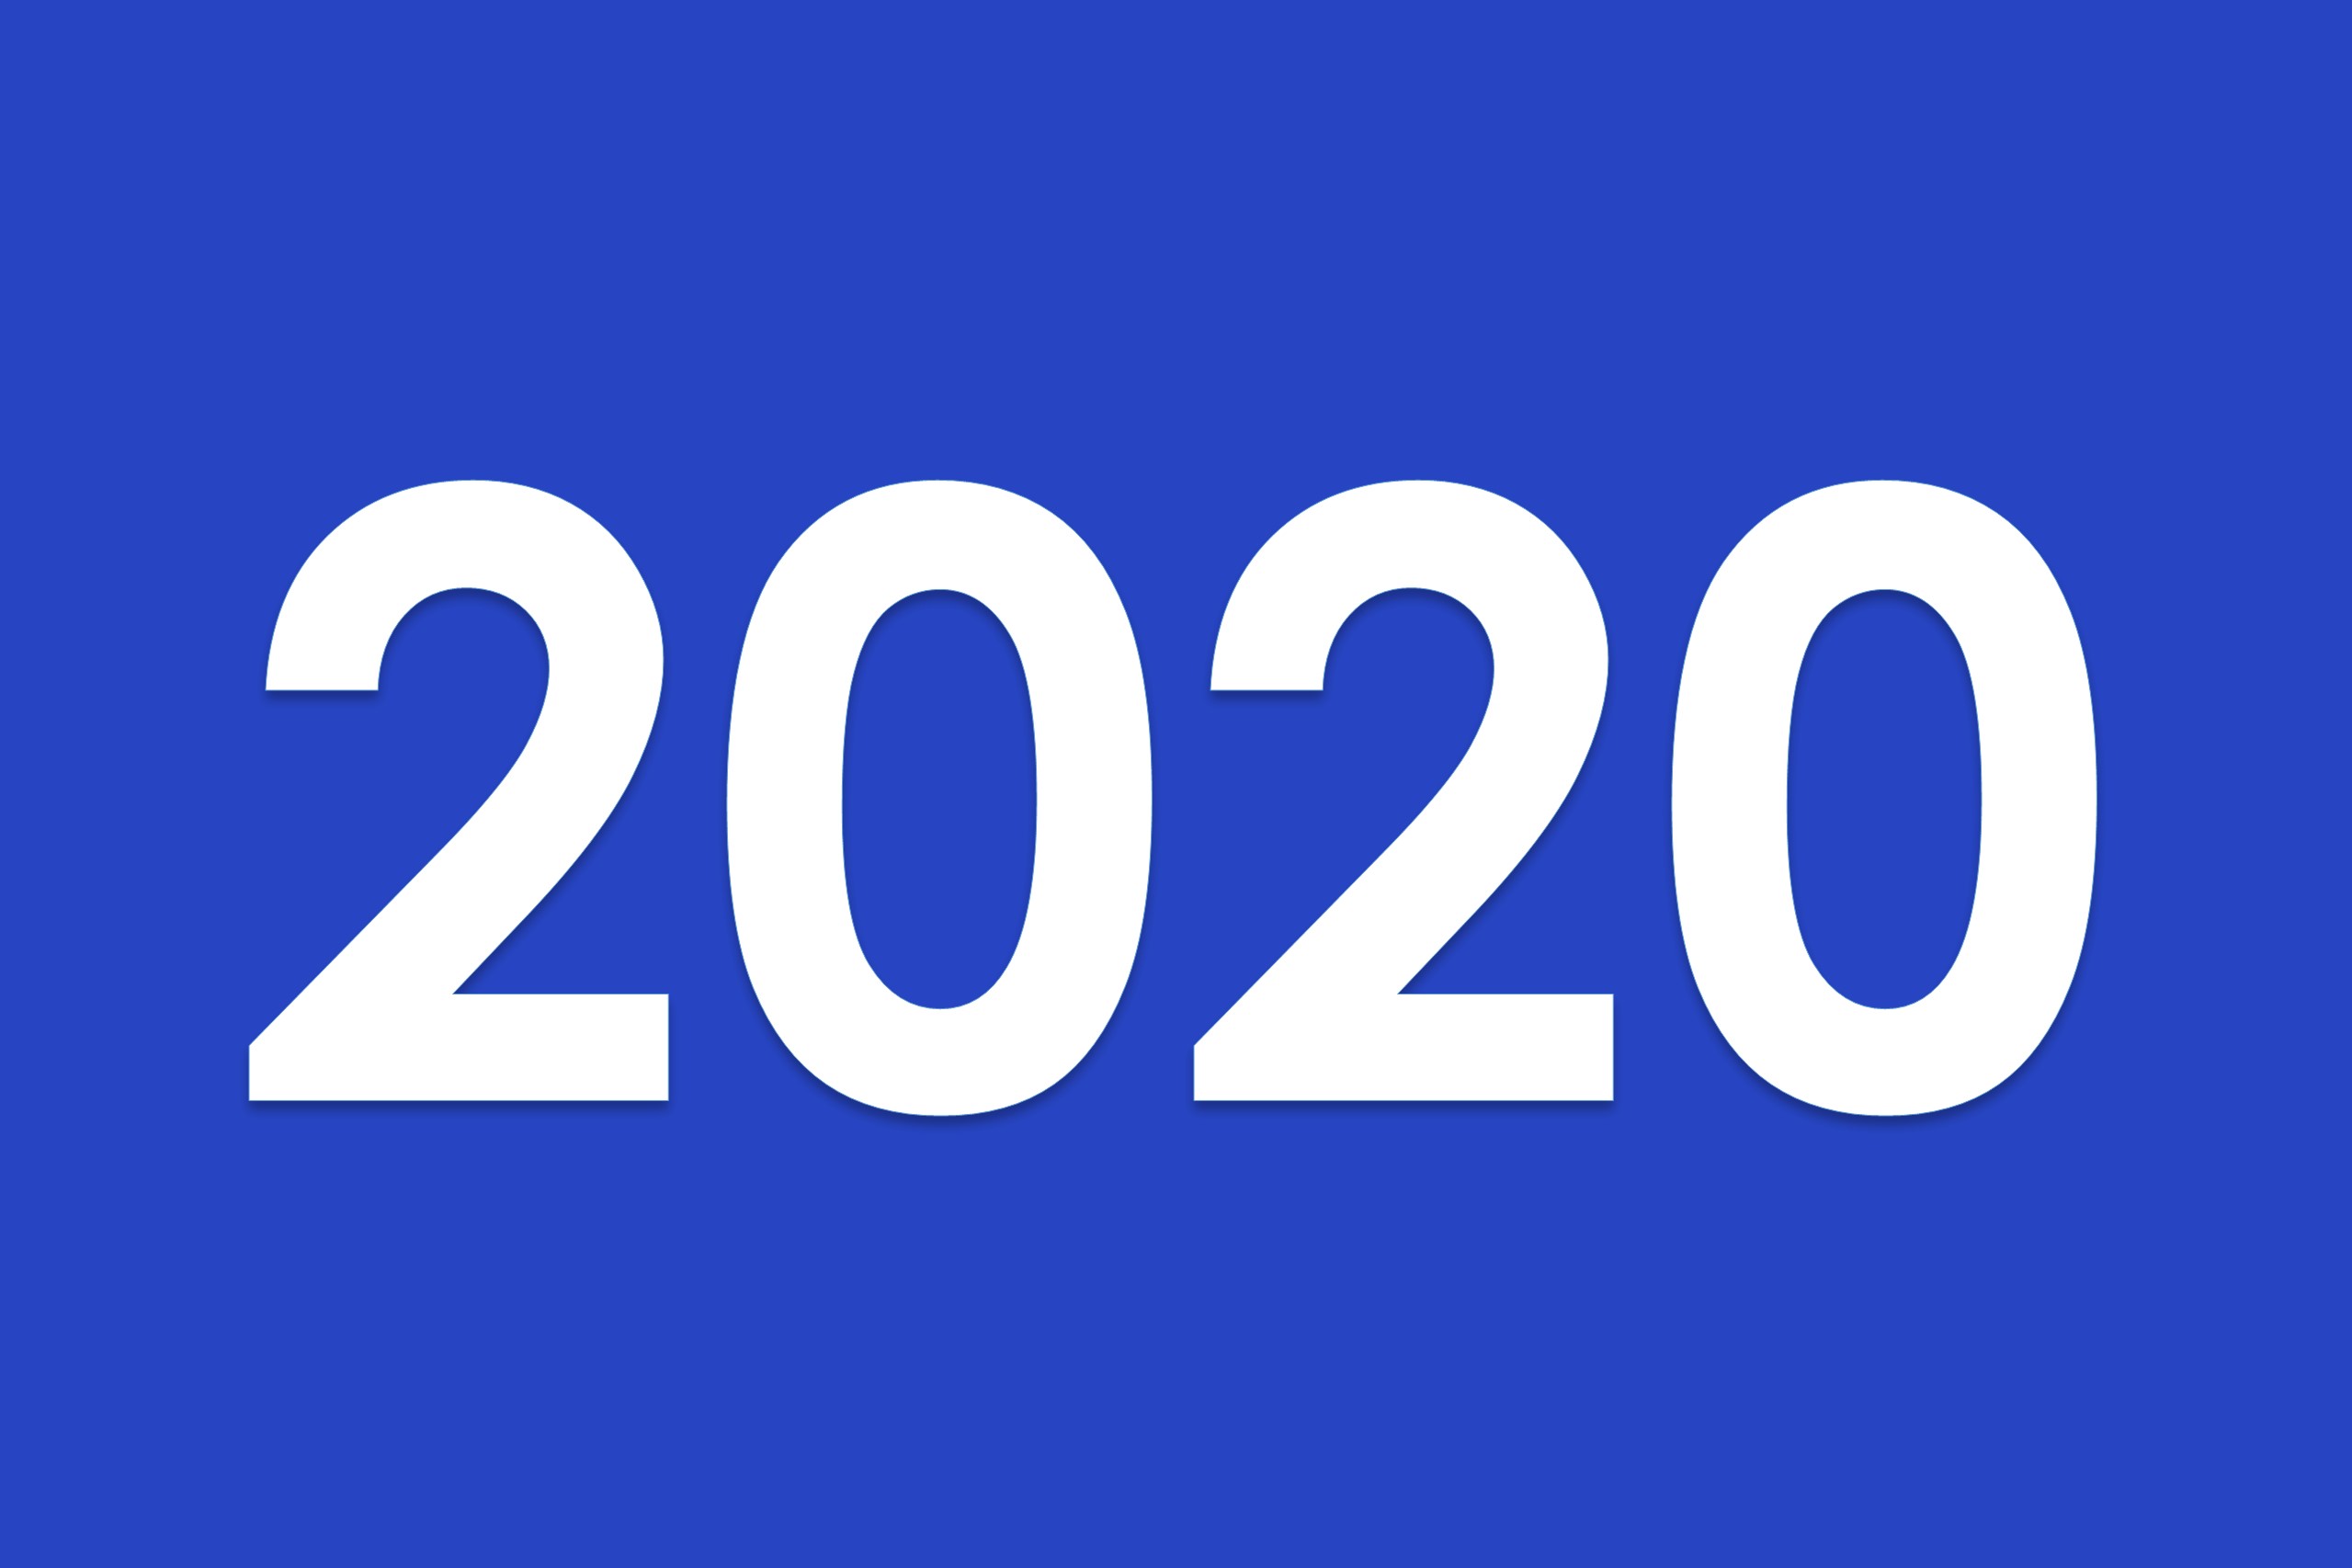 Annual General Meeting 2020